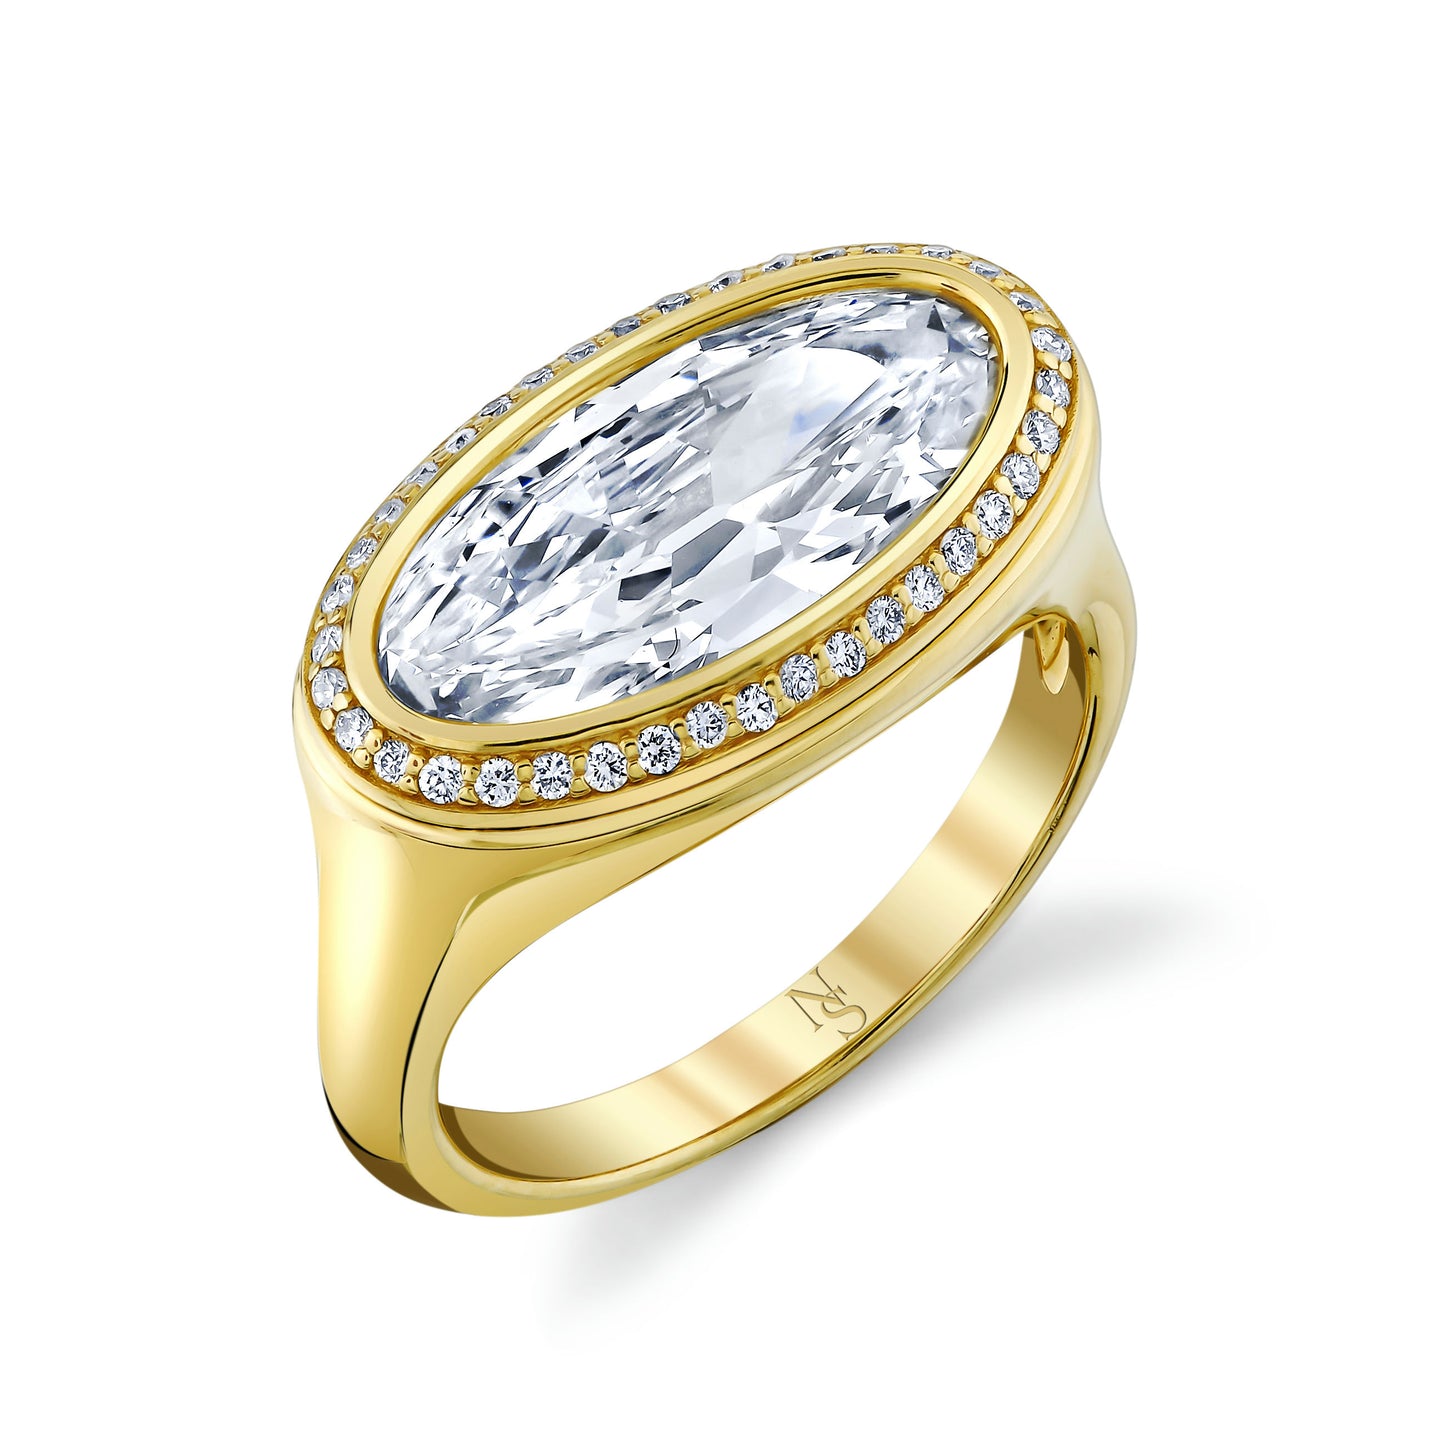 East West Oval Cut Diamond Halo Ring